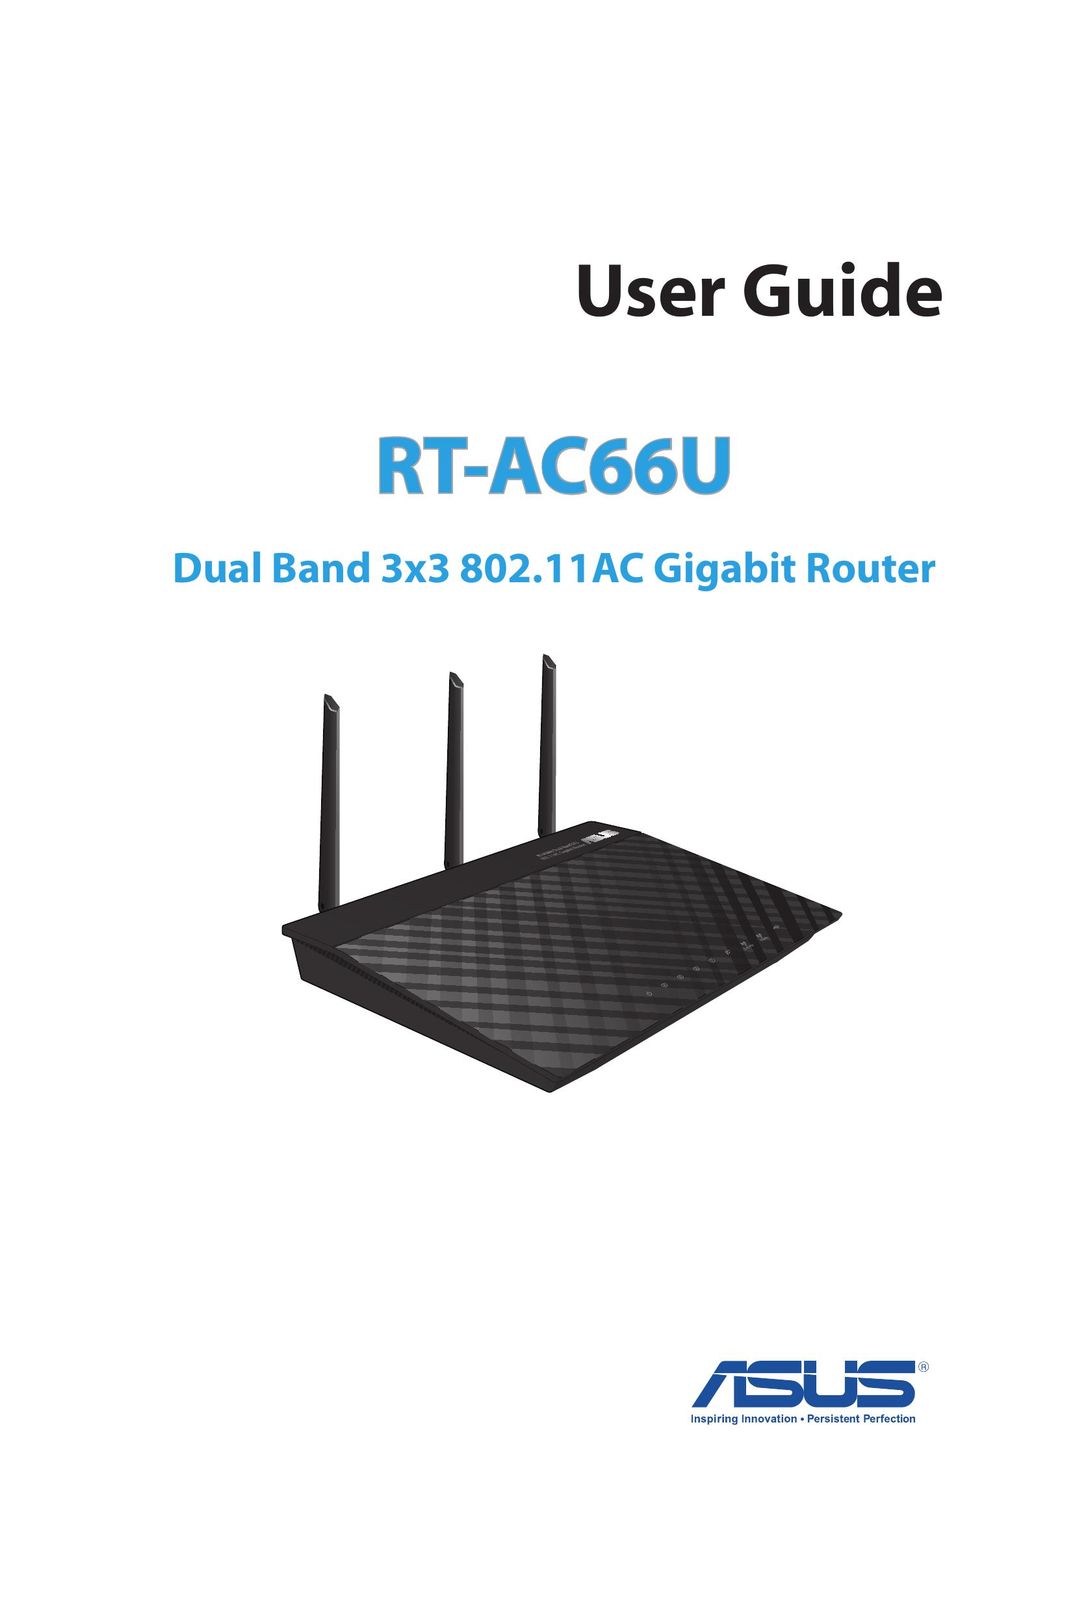 Asus RTAC66U Network Router User Manual